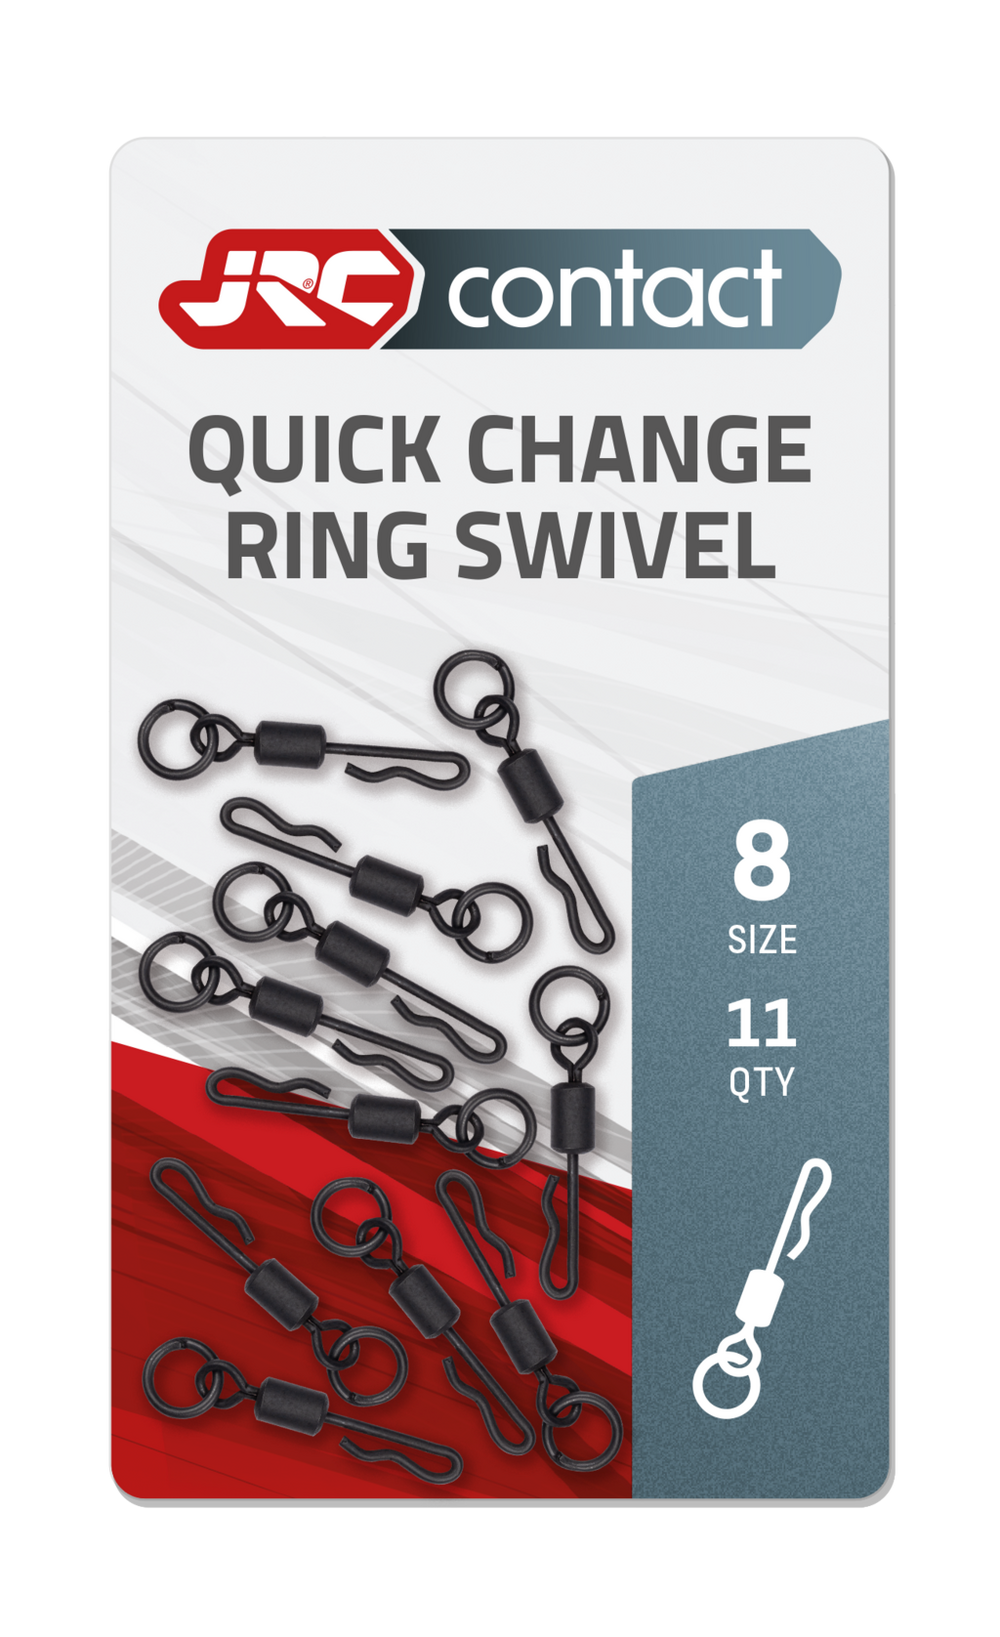 JRC Contact Quick Change Ring Swivel 11